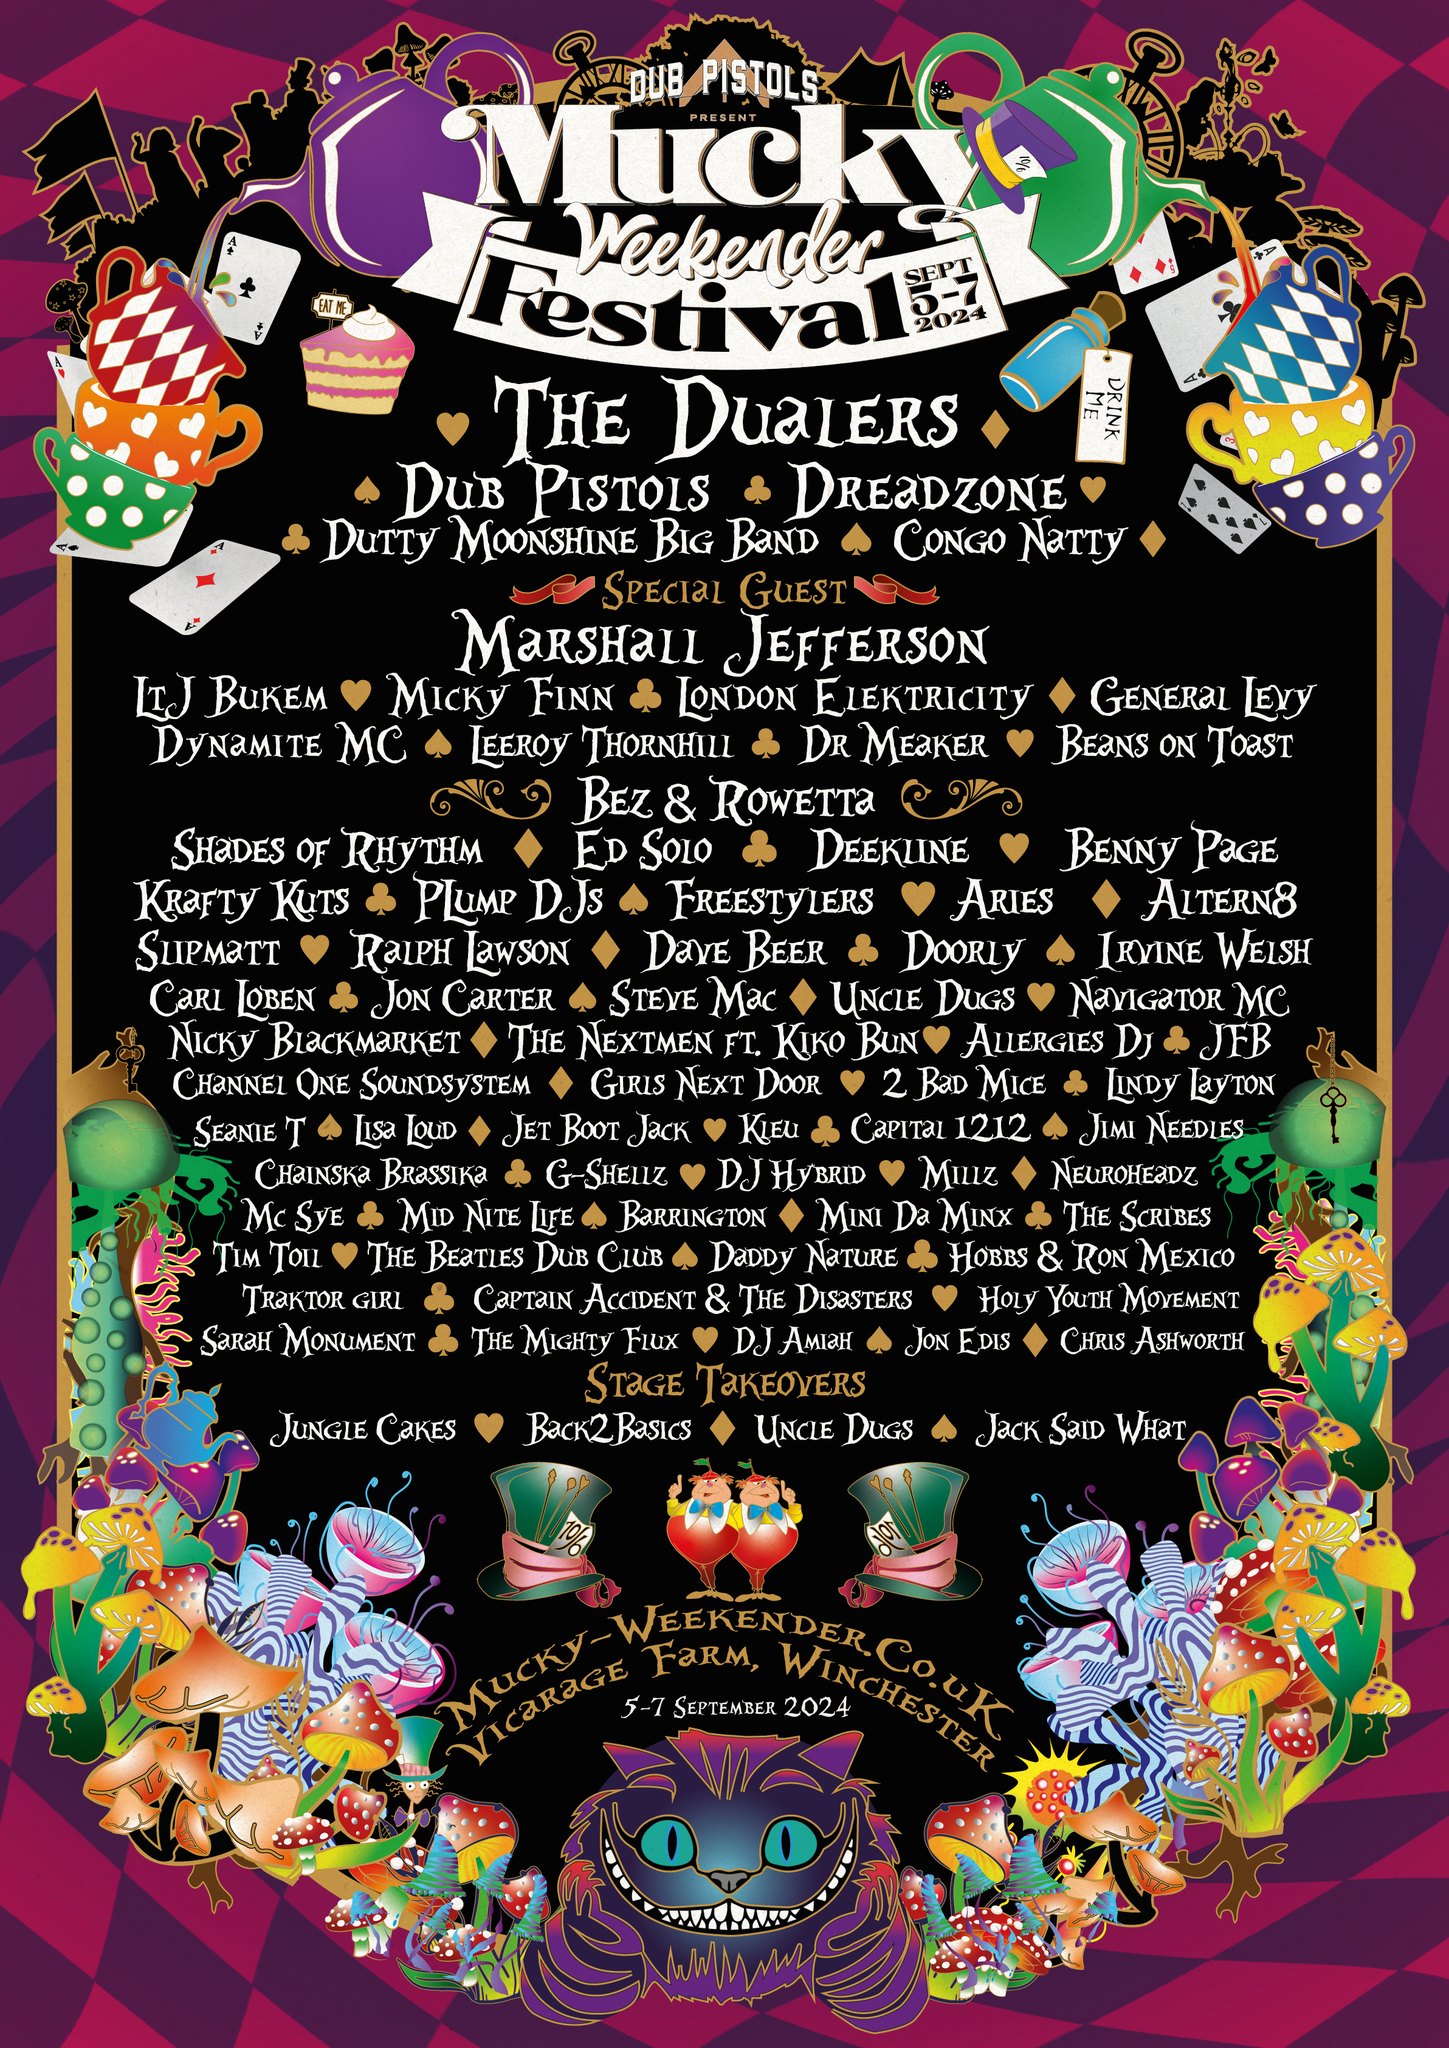 Mucky Weekender Festival: The Dualers, Dreadzone, Dutty Moonshine Big Band, Congo Natty, Marshall Jefferson, LTJ Bukem, General Levy, Bez &amp; Rowetta, Beans on Toast, Irvine Welsh + many more!